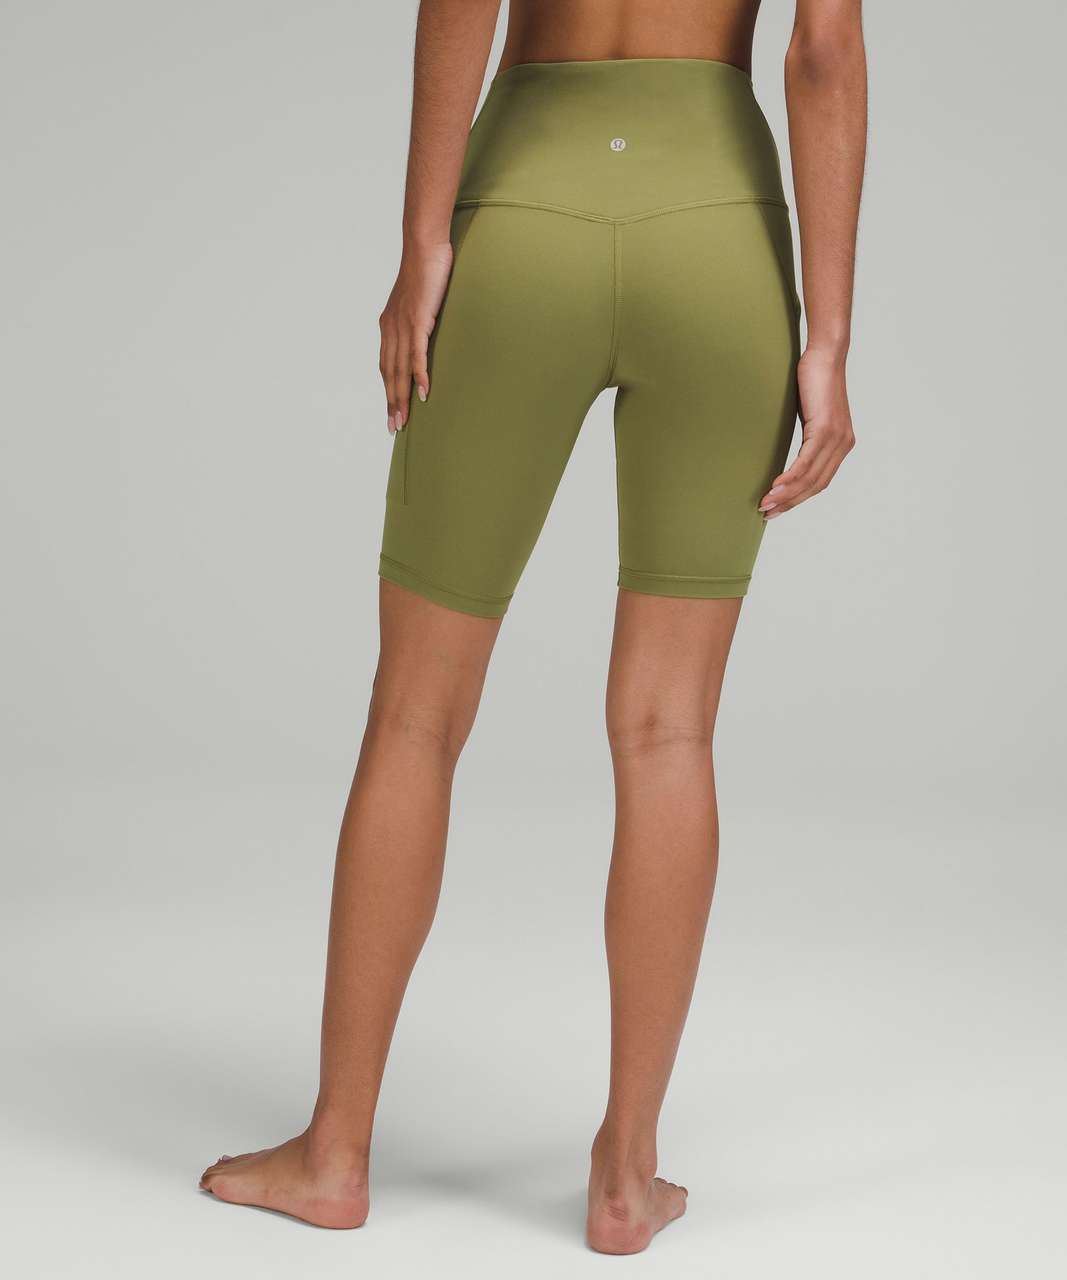 Lululemon Align High-Rise Short with Pockets 8" - Bronze Green